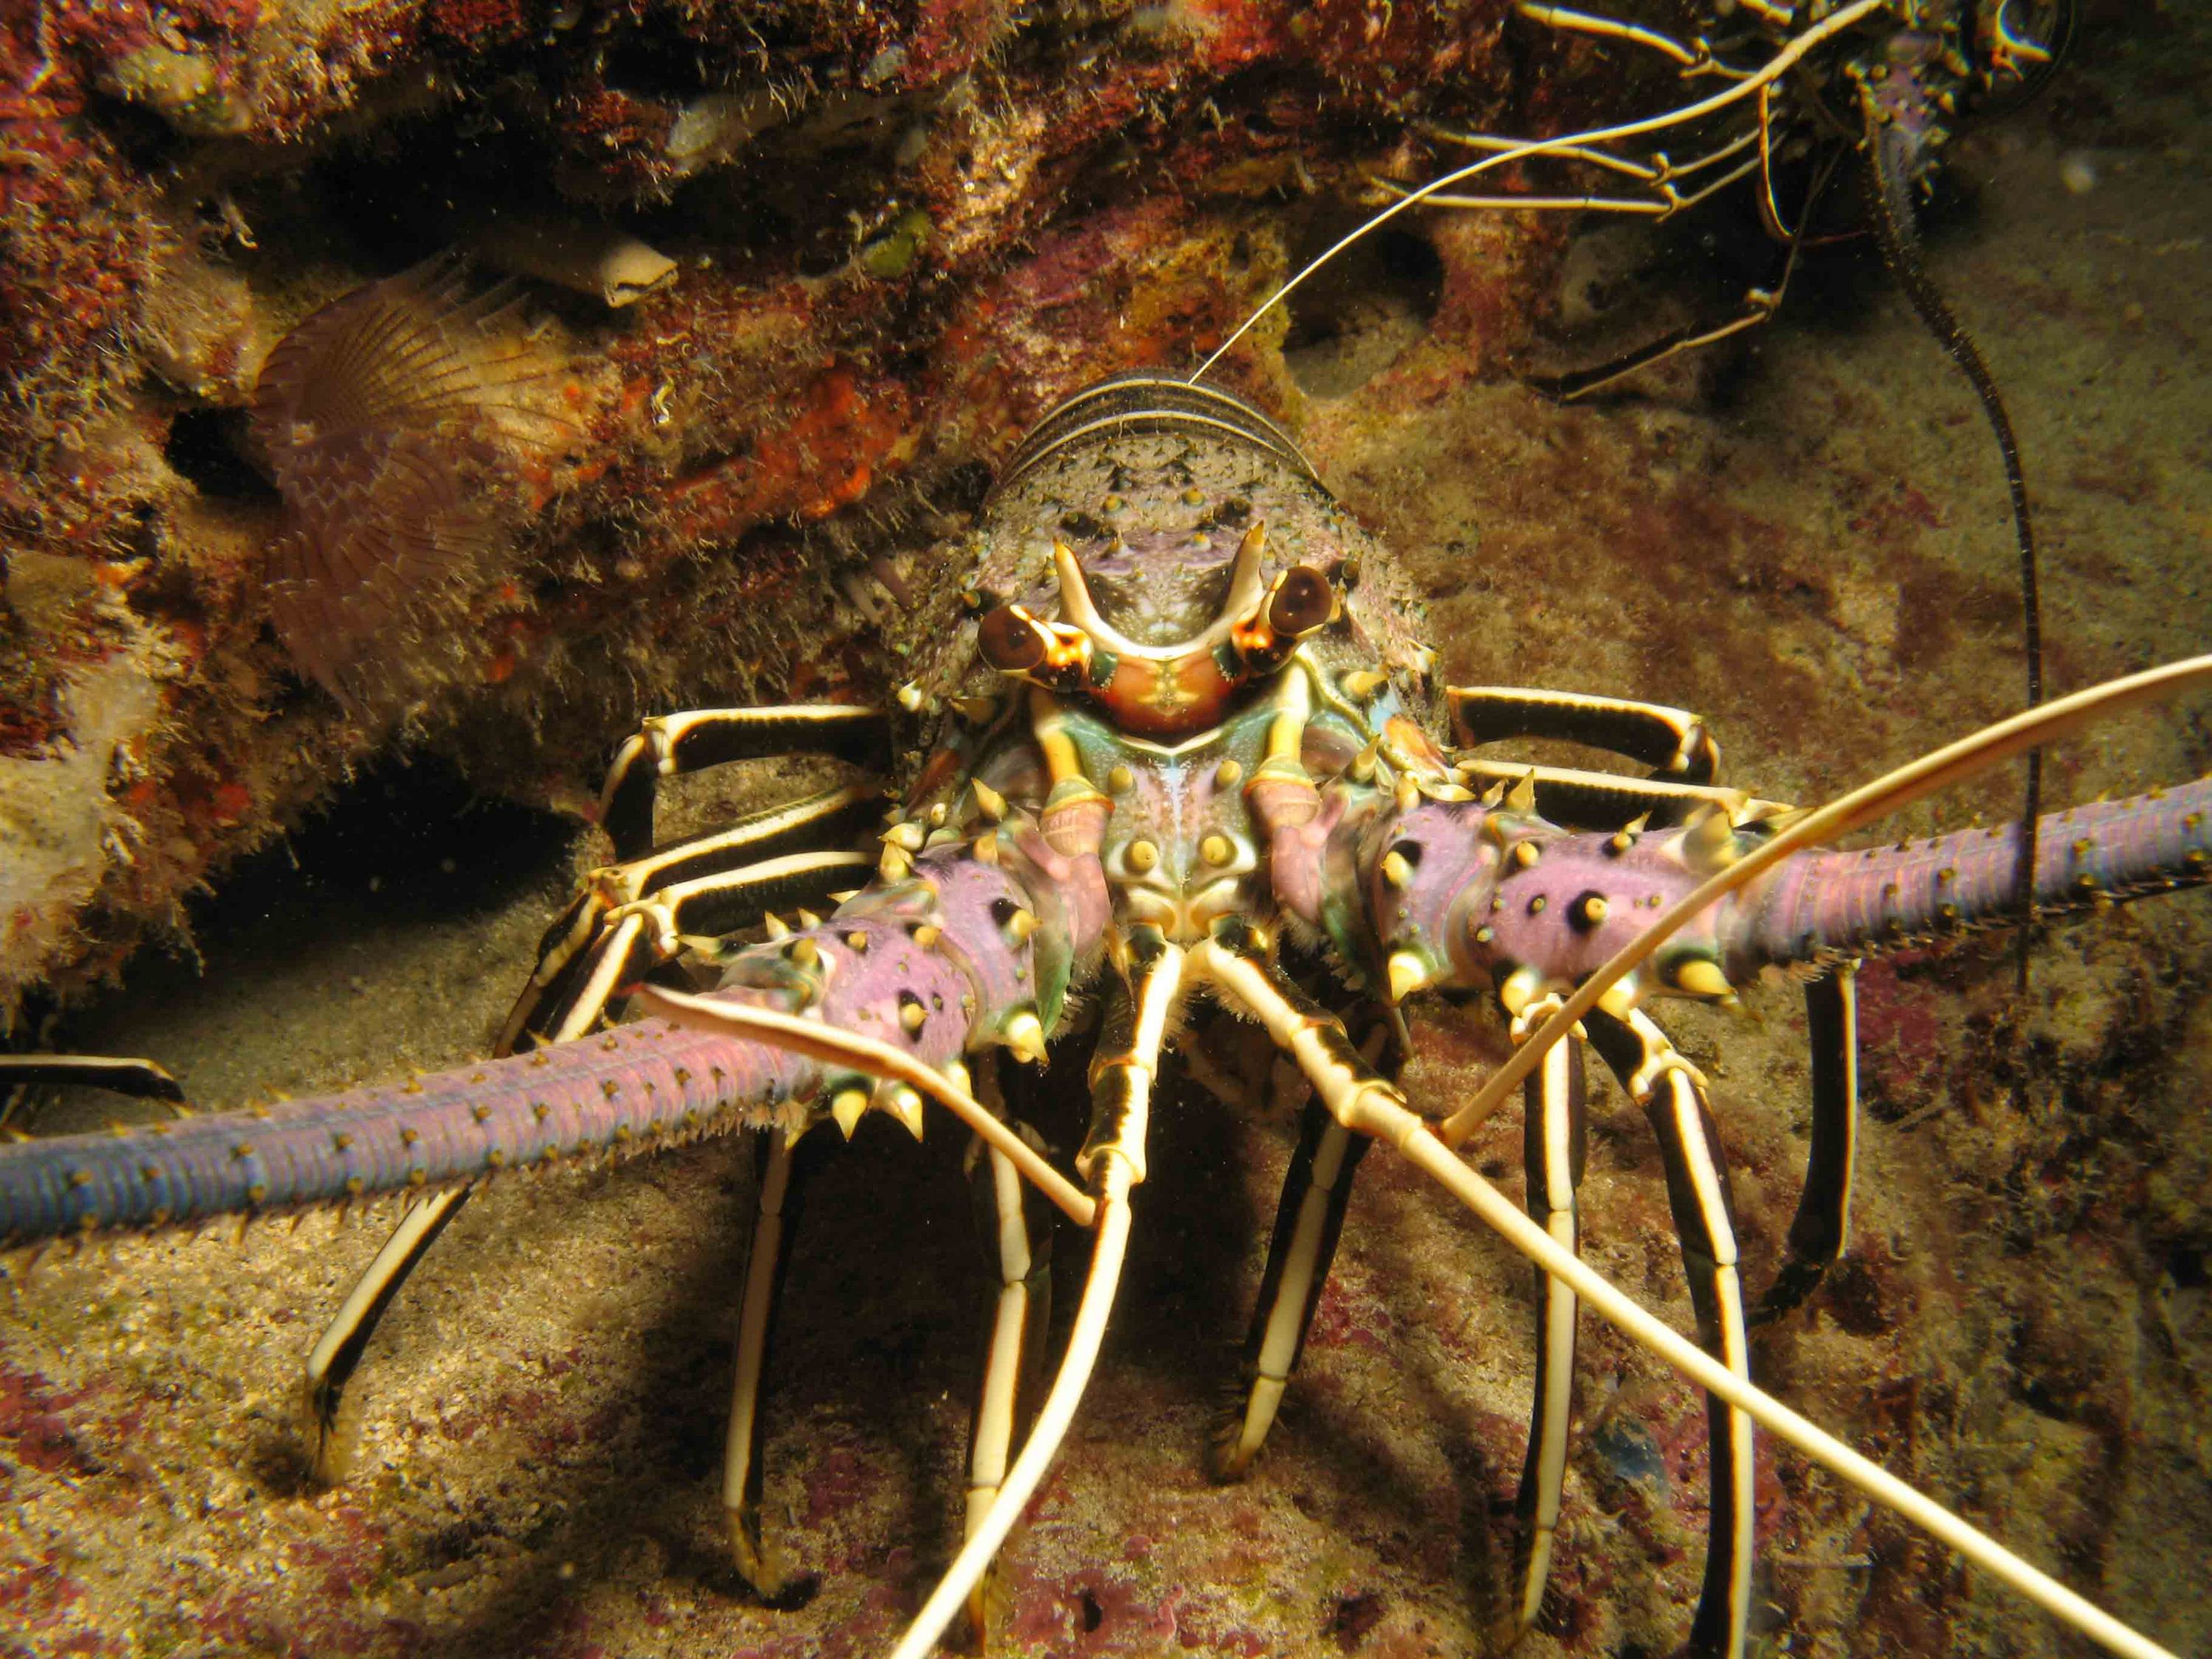 Lobster detail